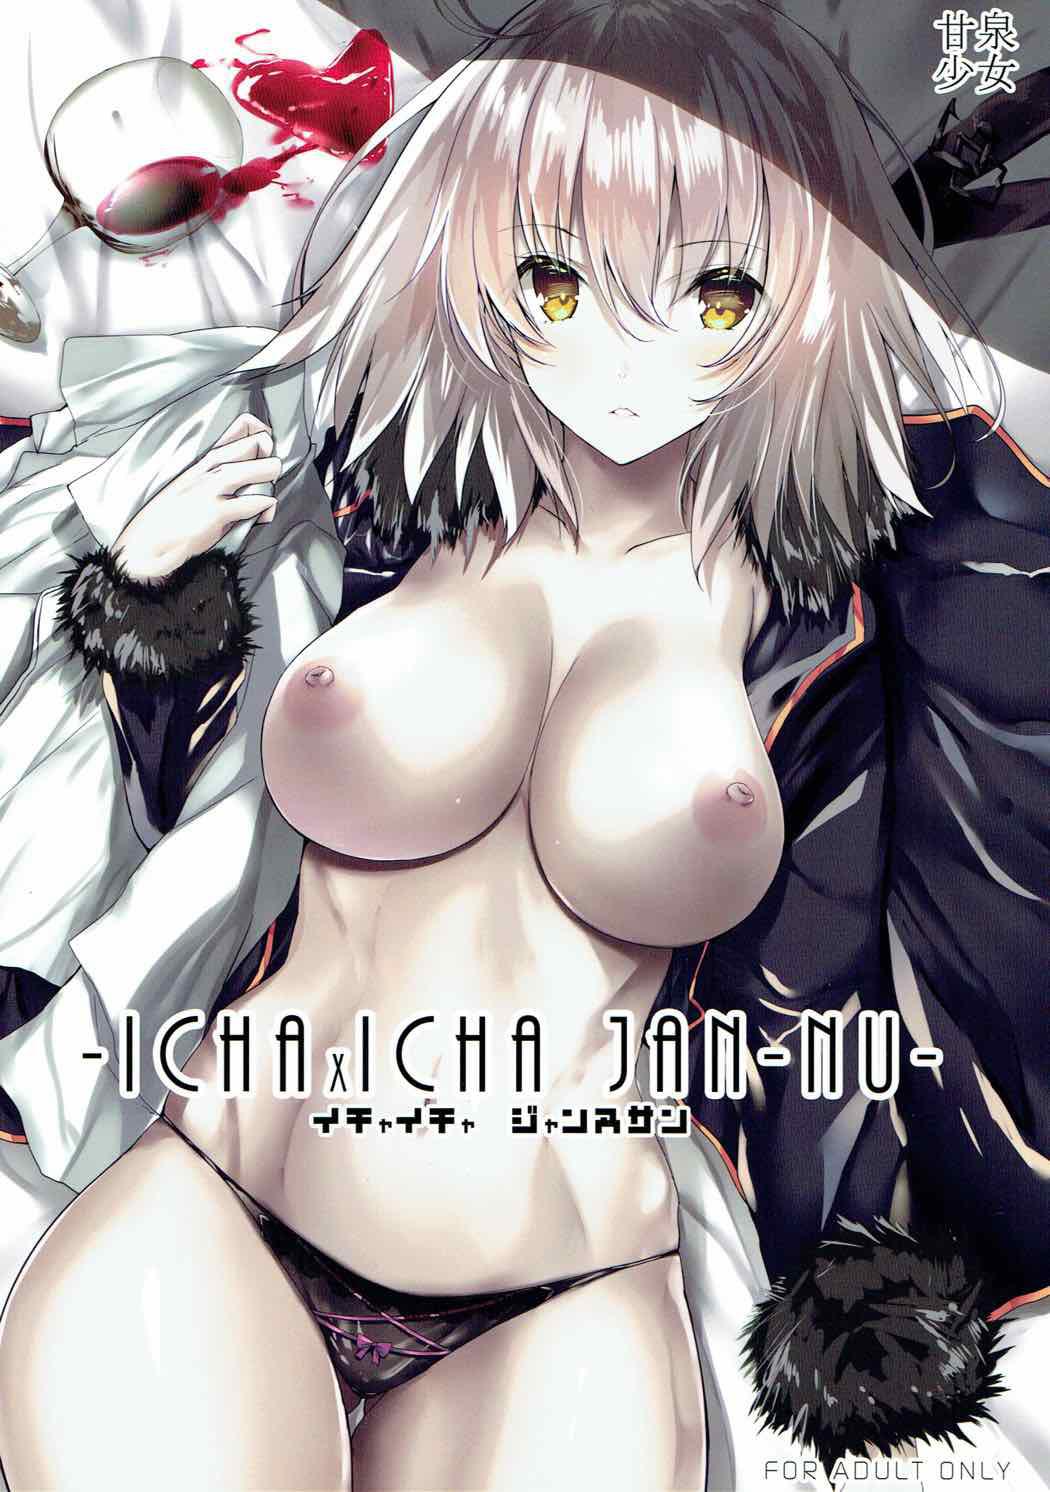 Ichaicha Jeanne-san 0